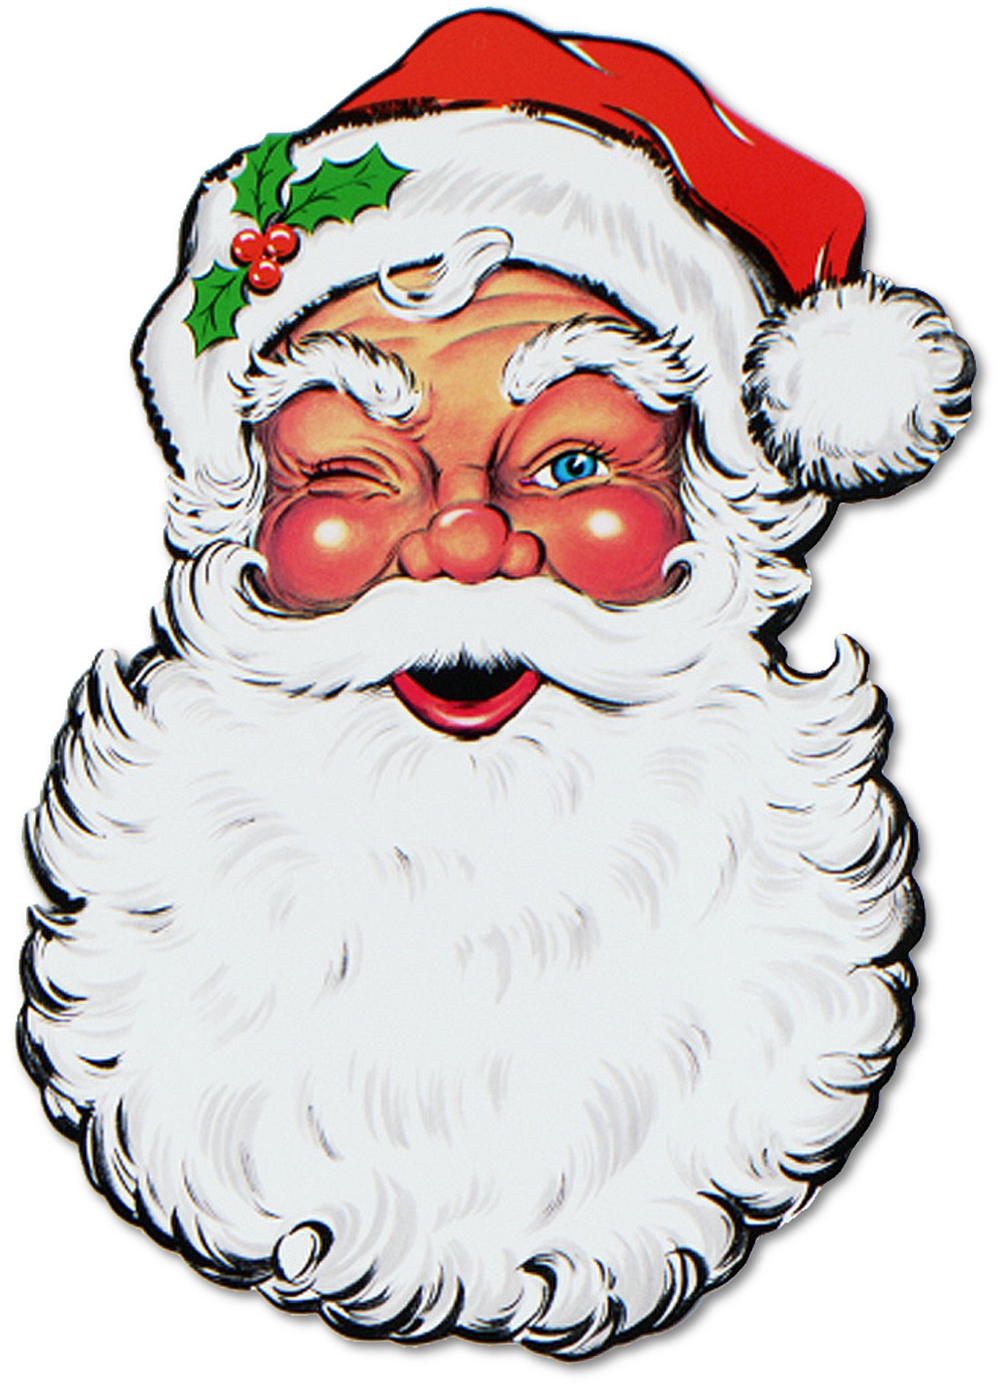 Santa Face Cutout   26   New For Christmas 2011   Christmas   The